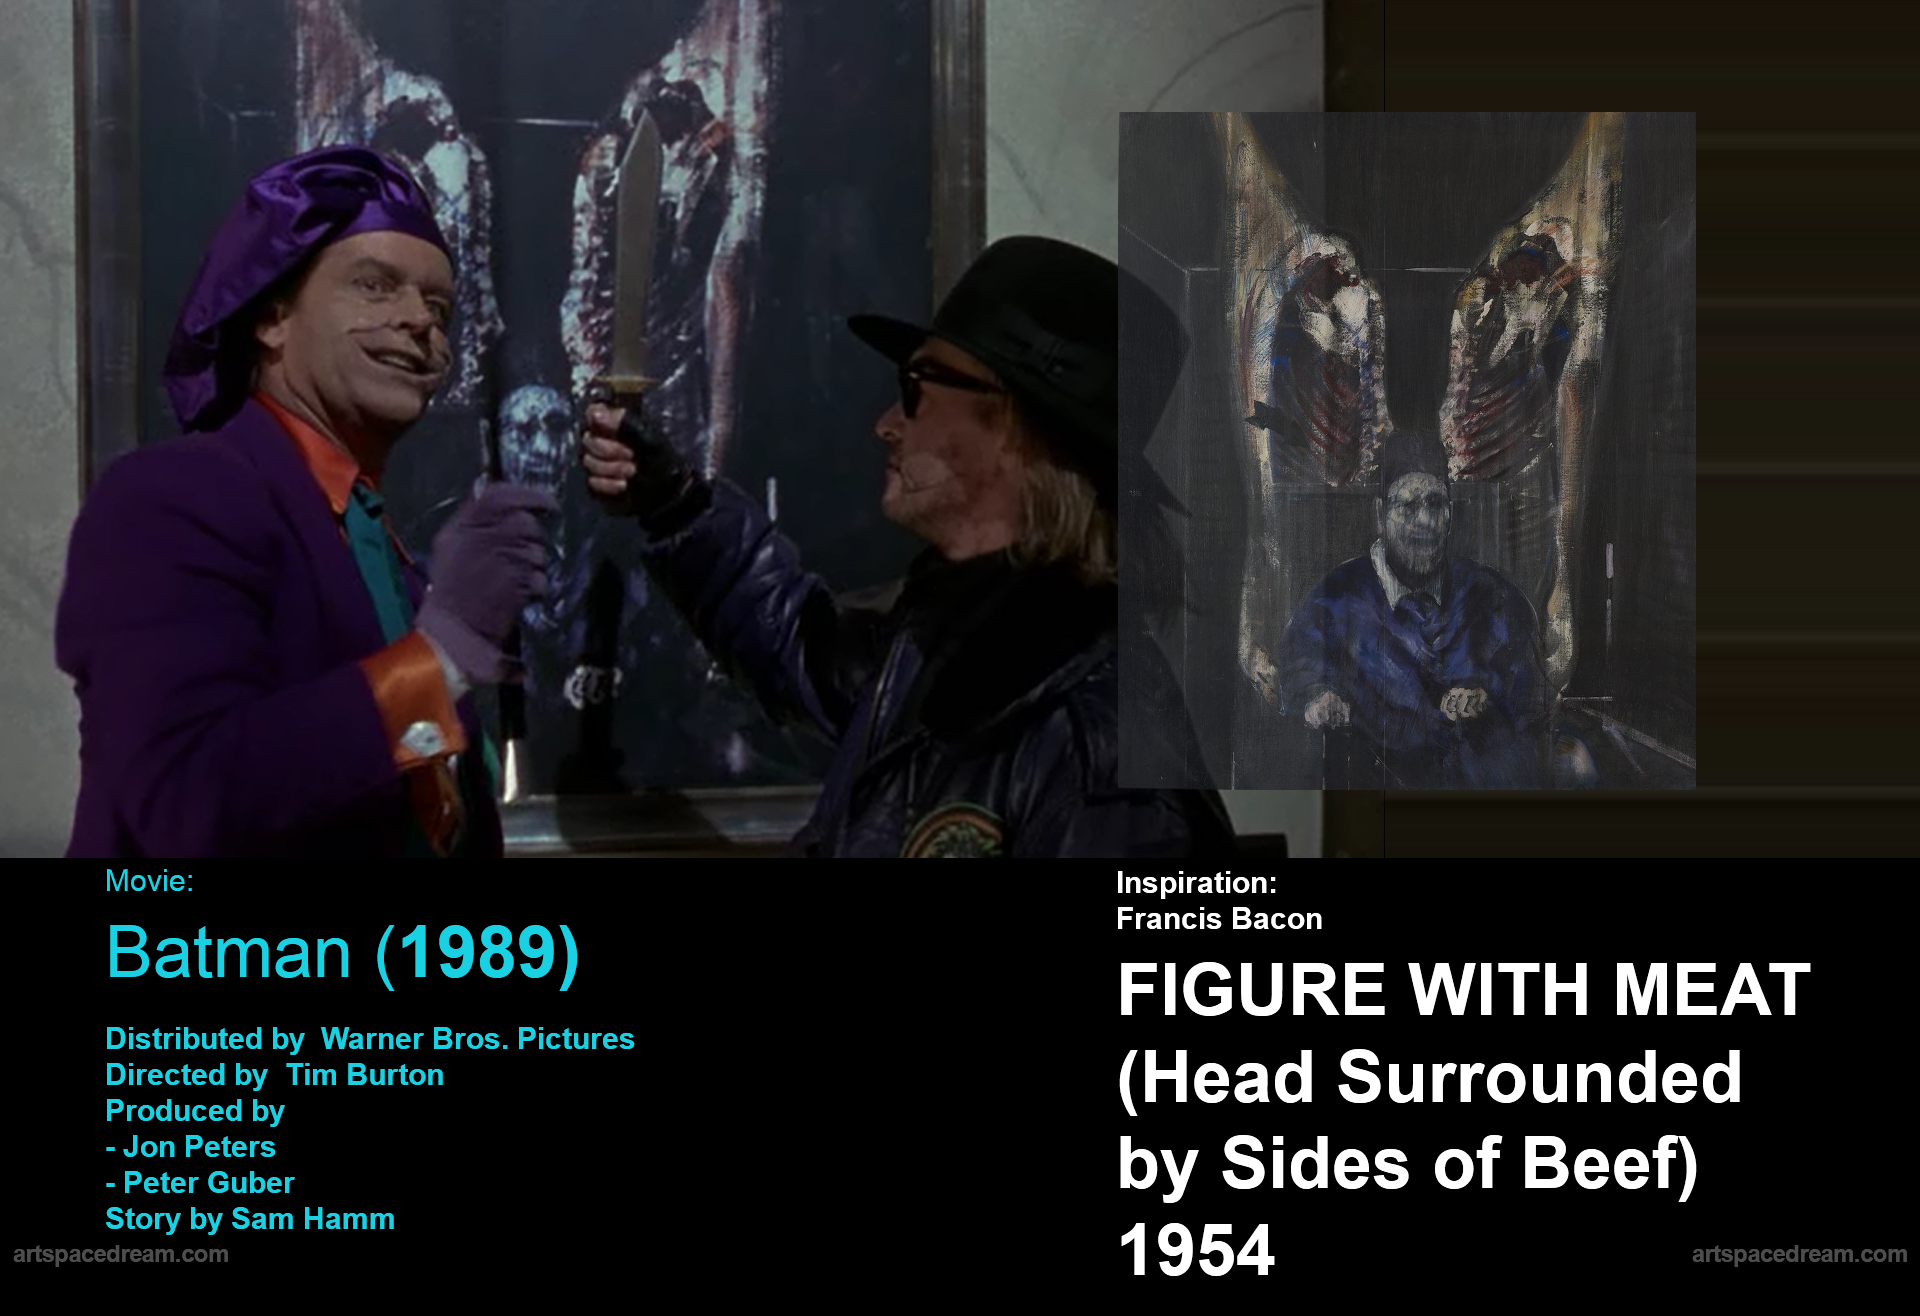 «Painting Francis Bacon. Movie: Batman (1989)